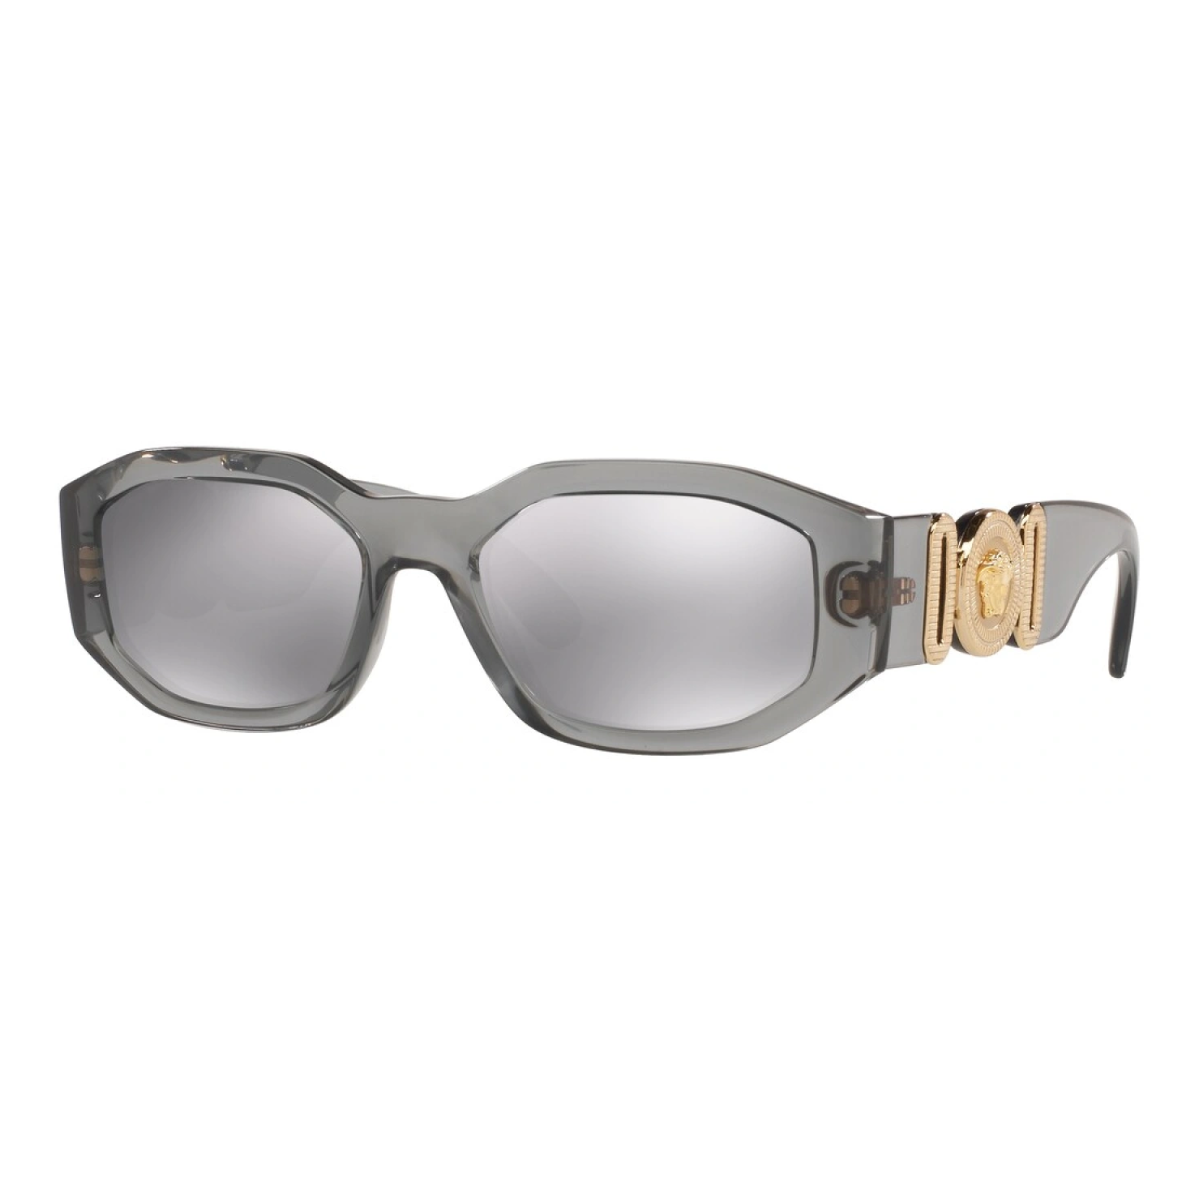 " Versace 4361 311/6G Square Sunglasses for Men and Women. Light grey mirror lenses, non-polarized, high-quality materials. Shop at Optorium. at optorium"